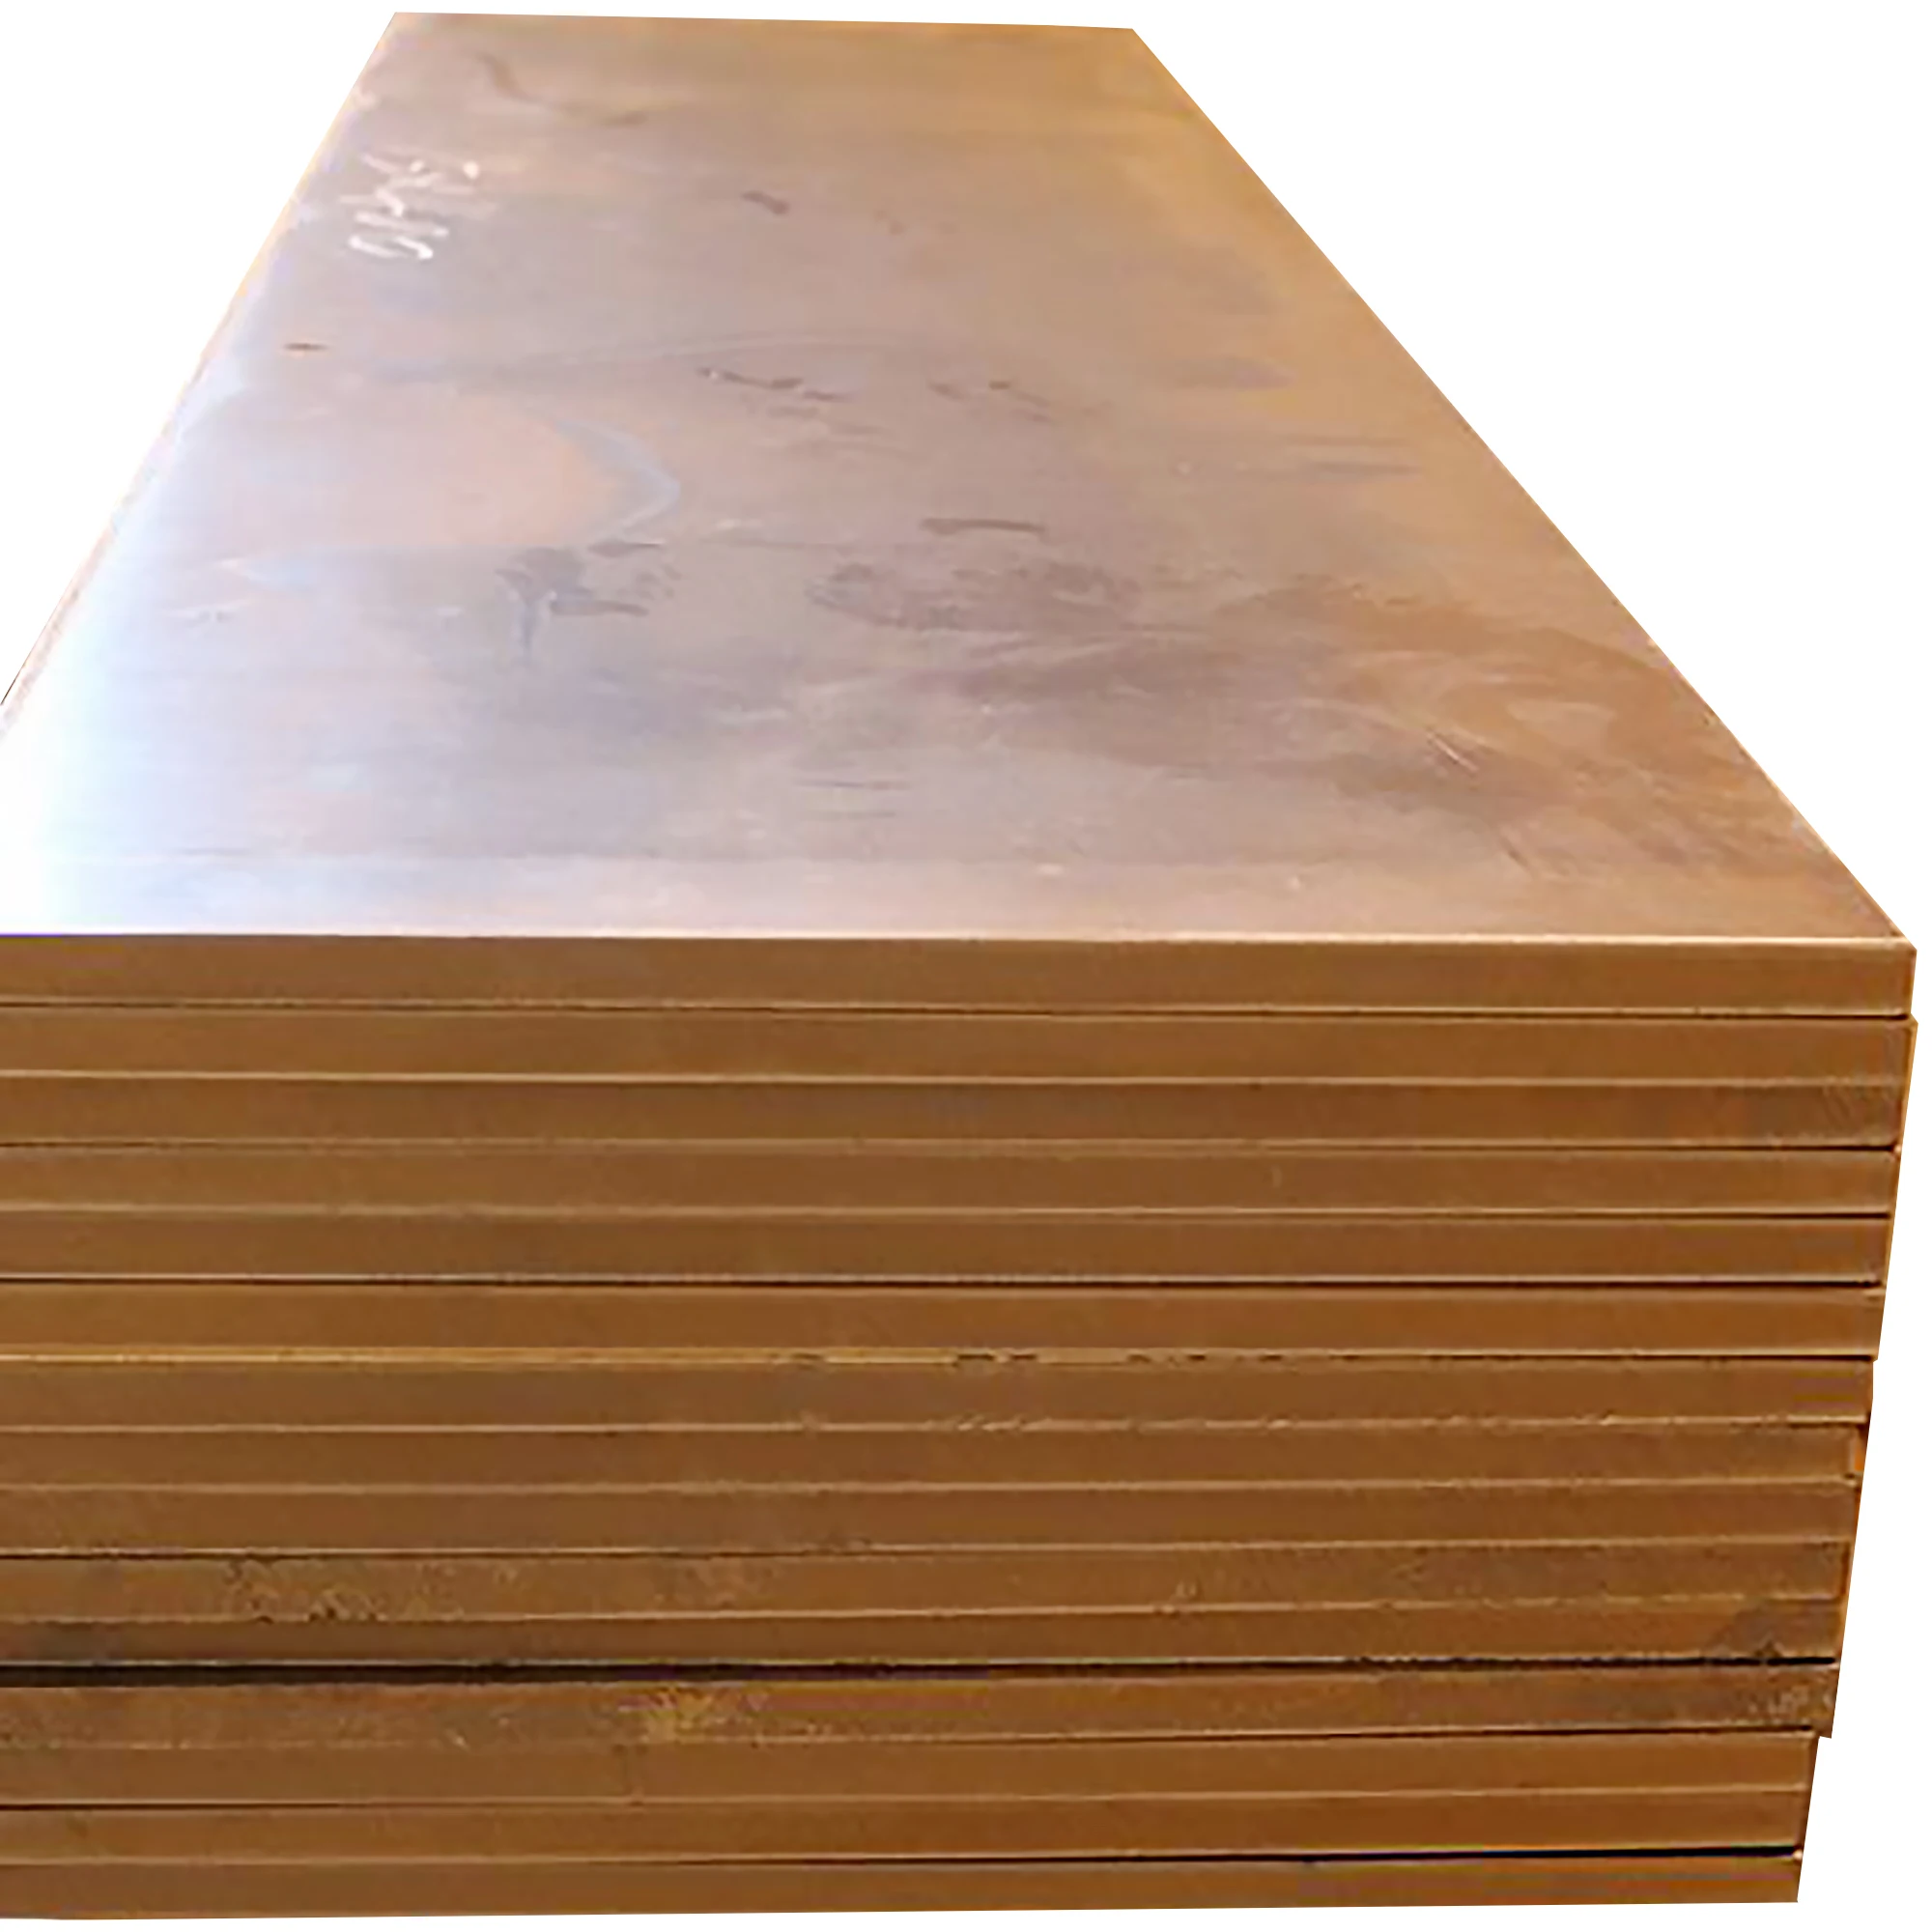 Qsn4 0.3 high quality decorative copper plate, pure copper plate wholesale price copper plate (1600569608987)